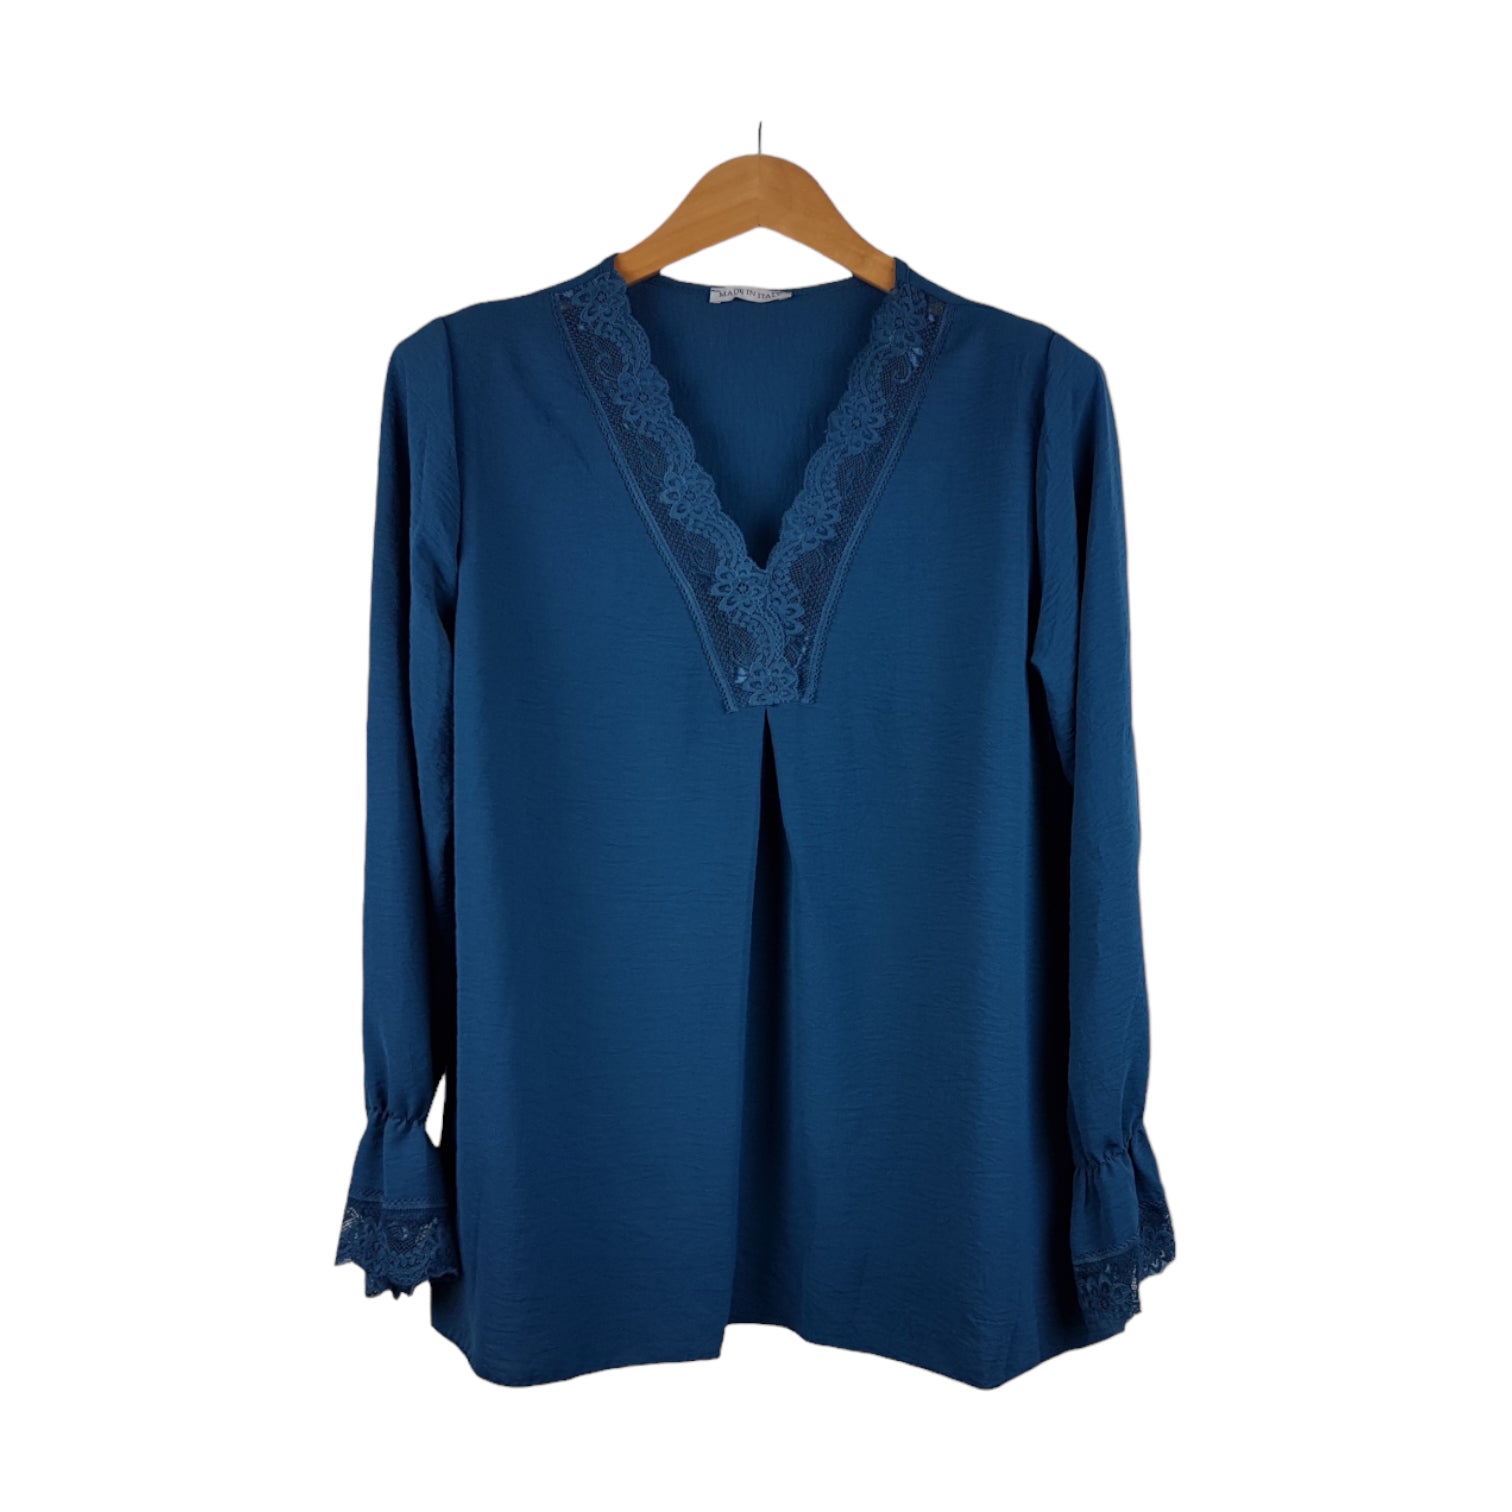 Blusa Azul Renda | Acexarme. Mais modelos Blusas Mulher disponíveis.